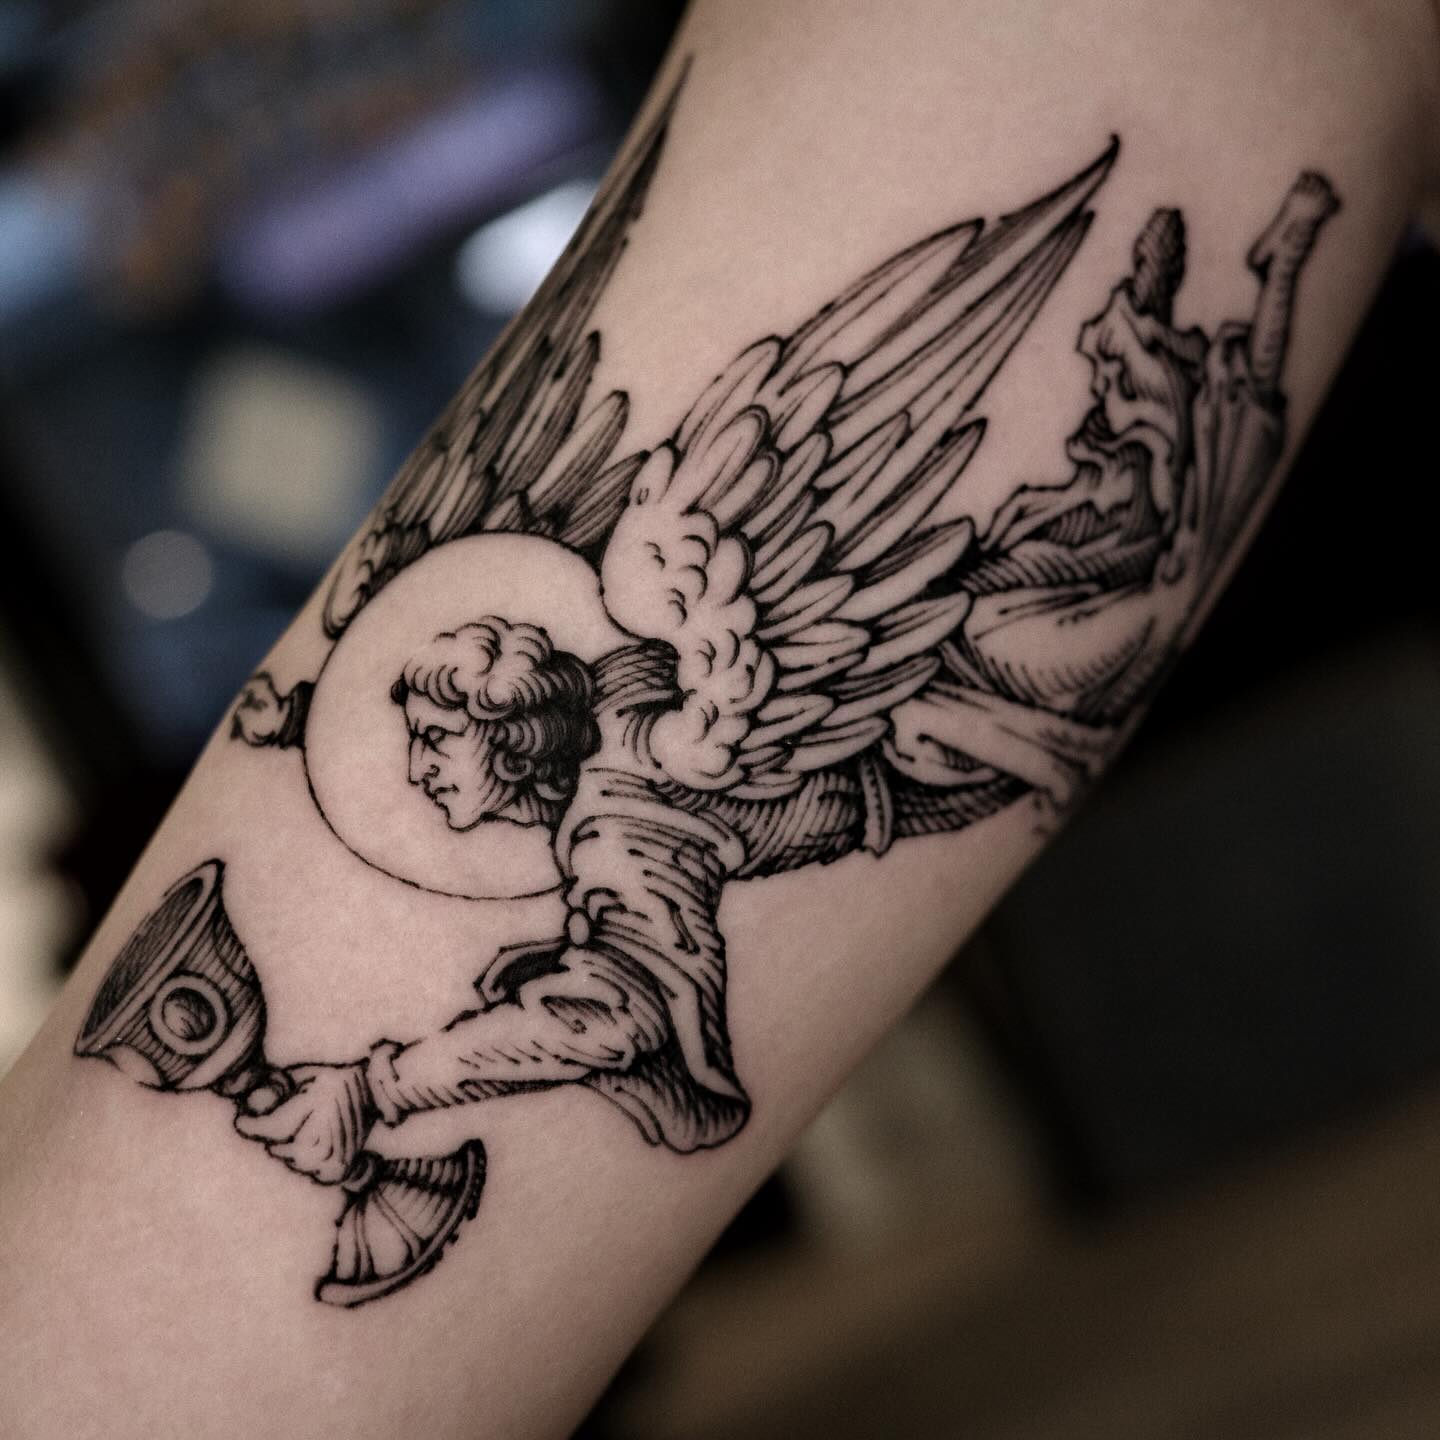 amazing angel tattoo by octopvs.ink